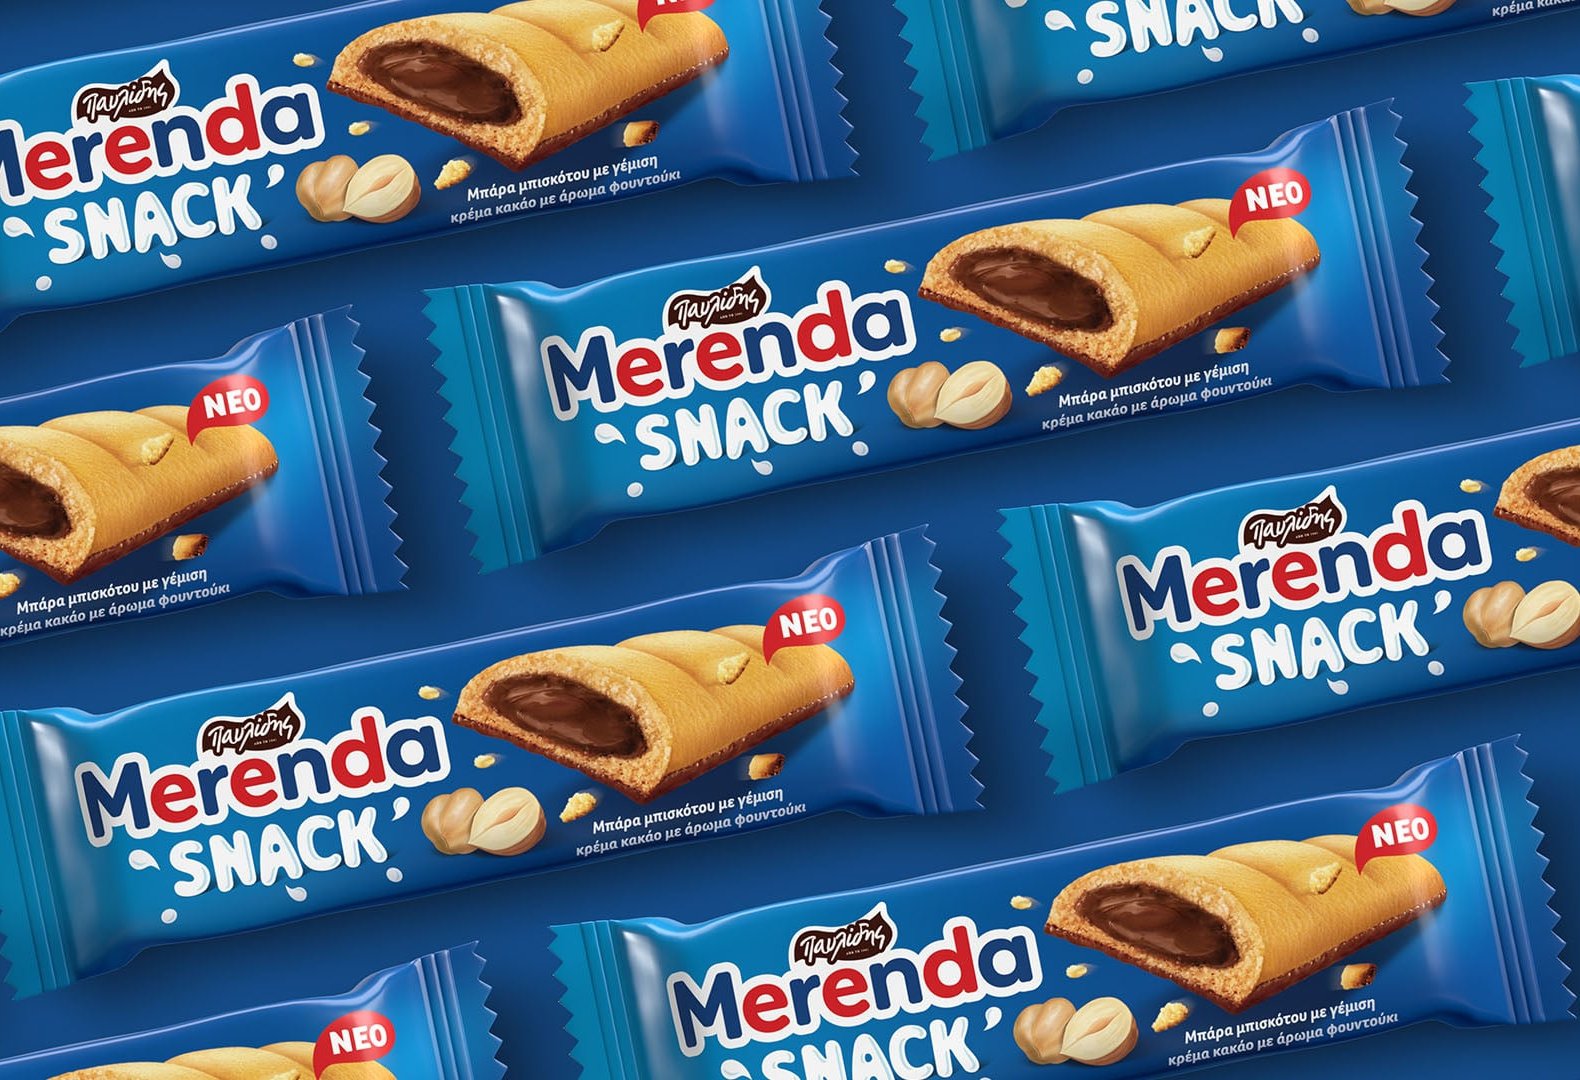 Merenda snack chocolate-biscuit bar multiple packages aligned